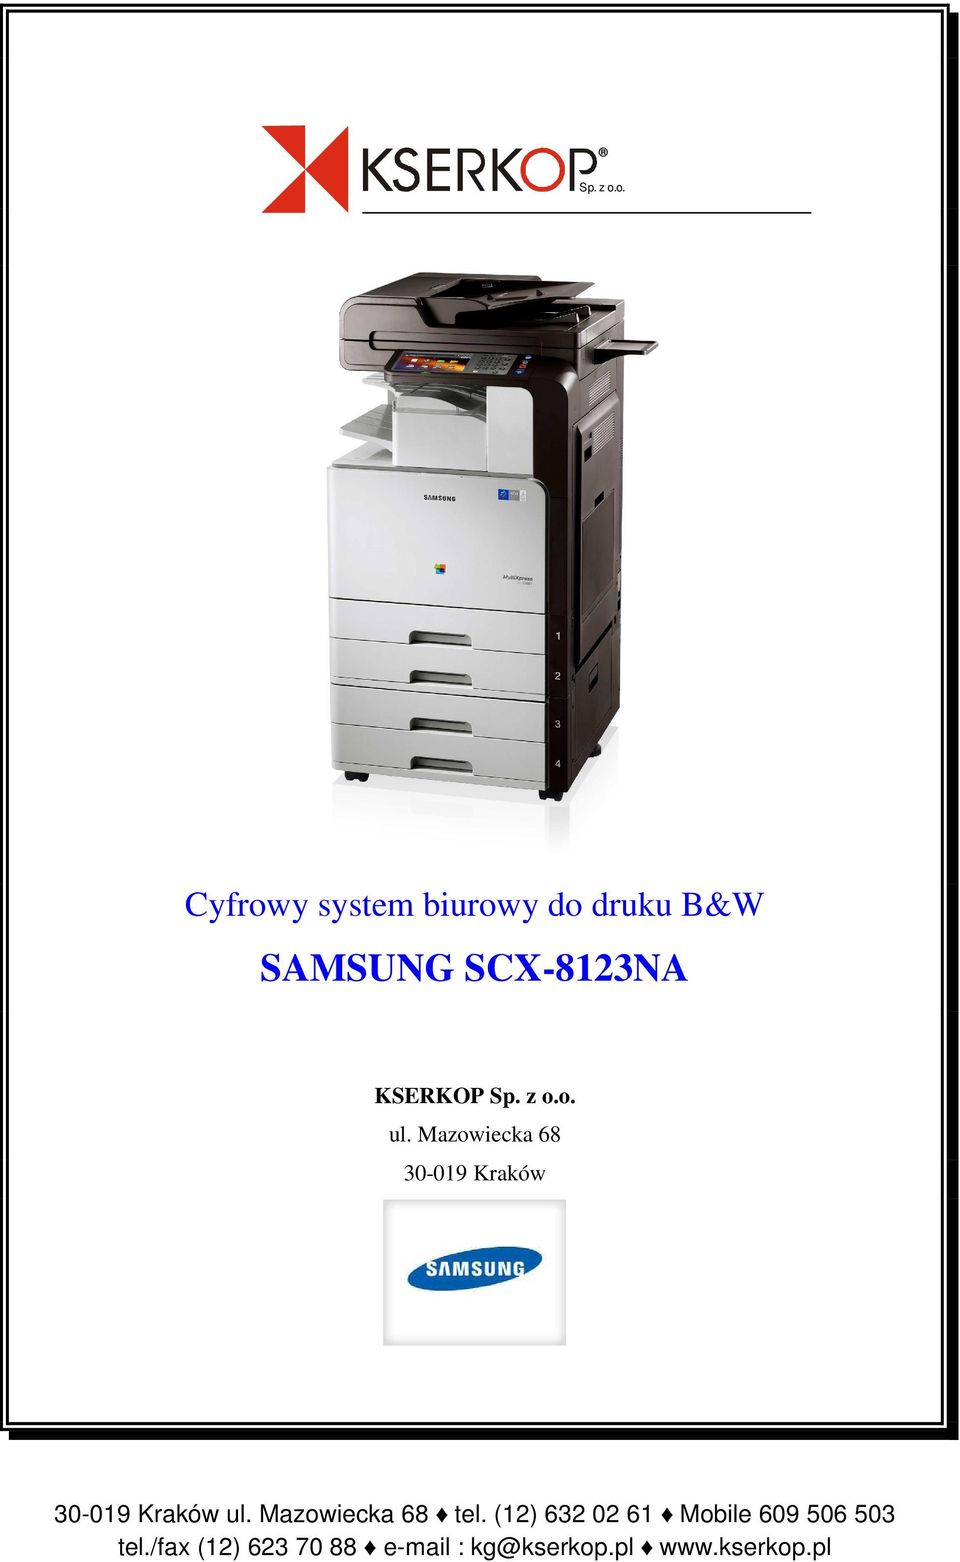 druku B&W SAMSUNG SCX-8123NA